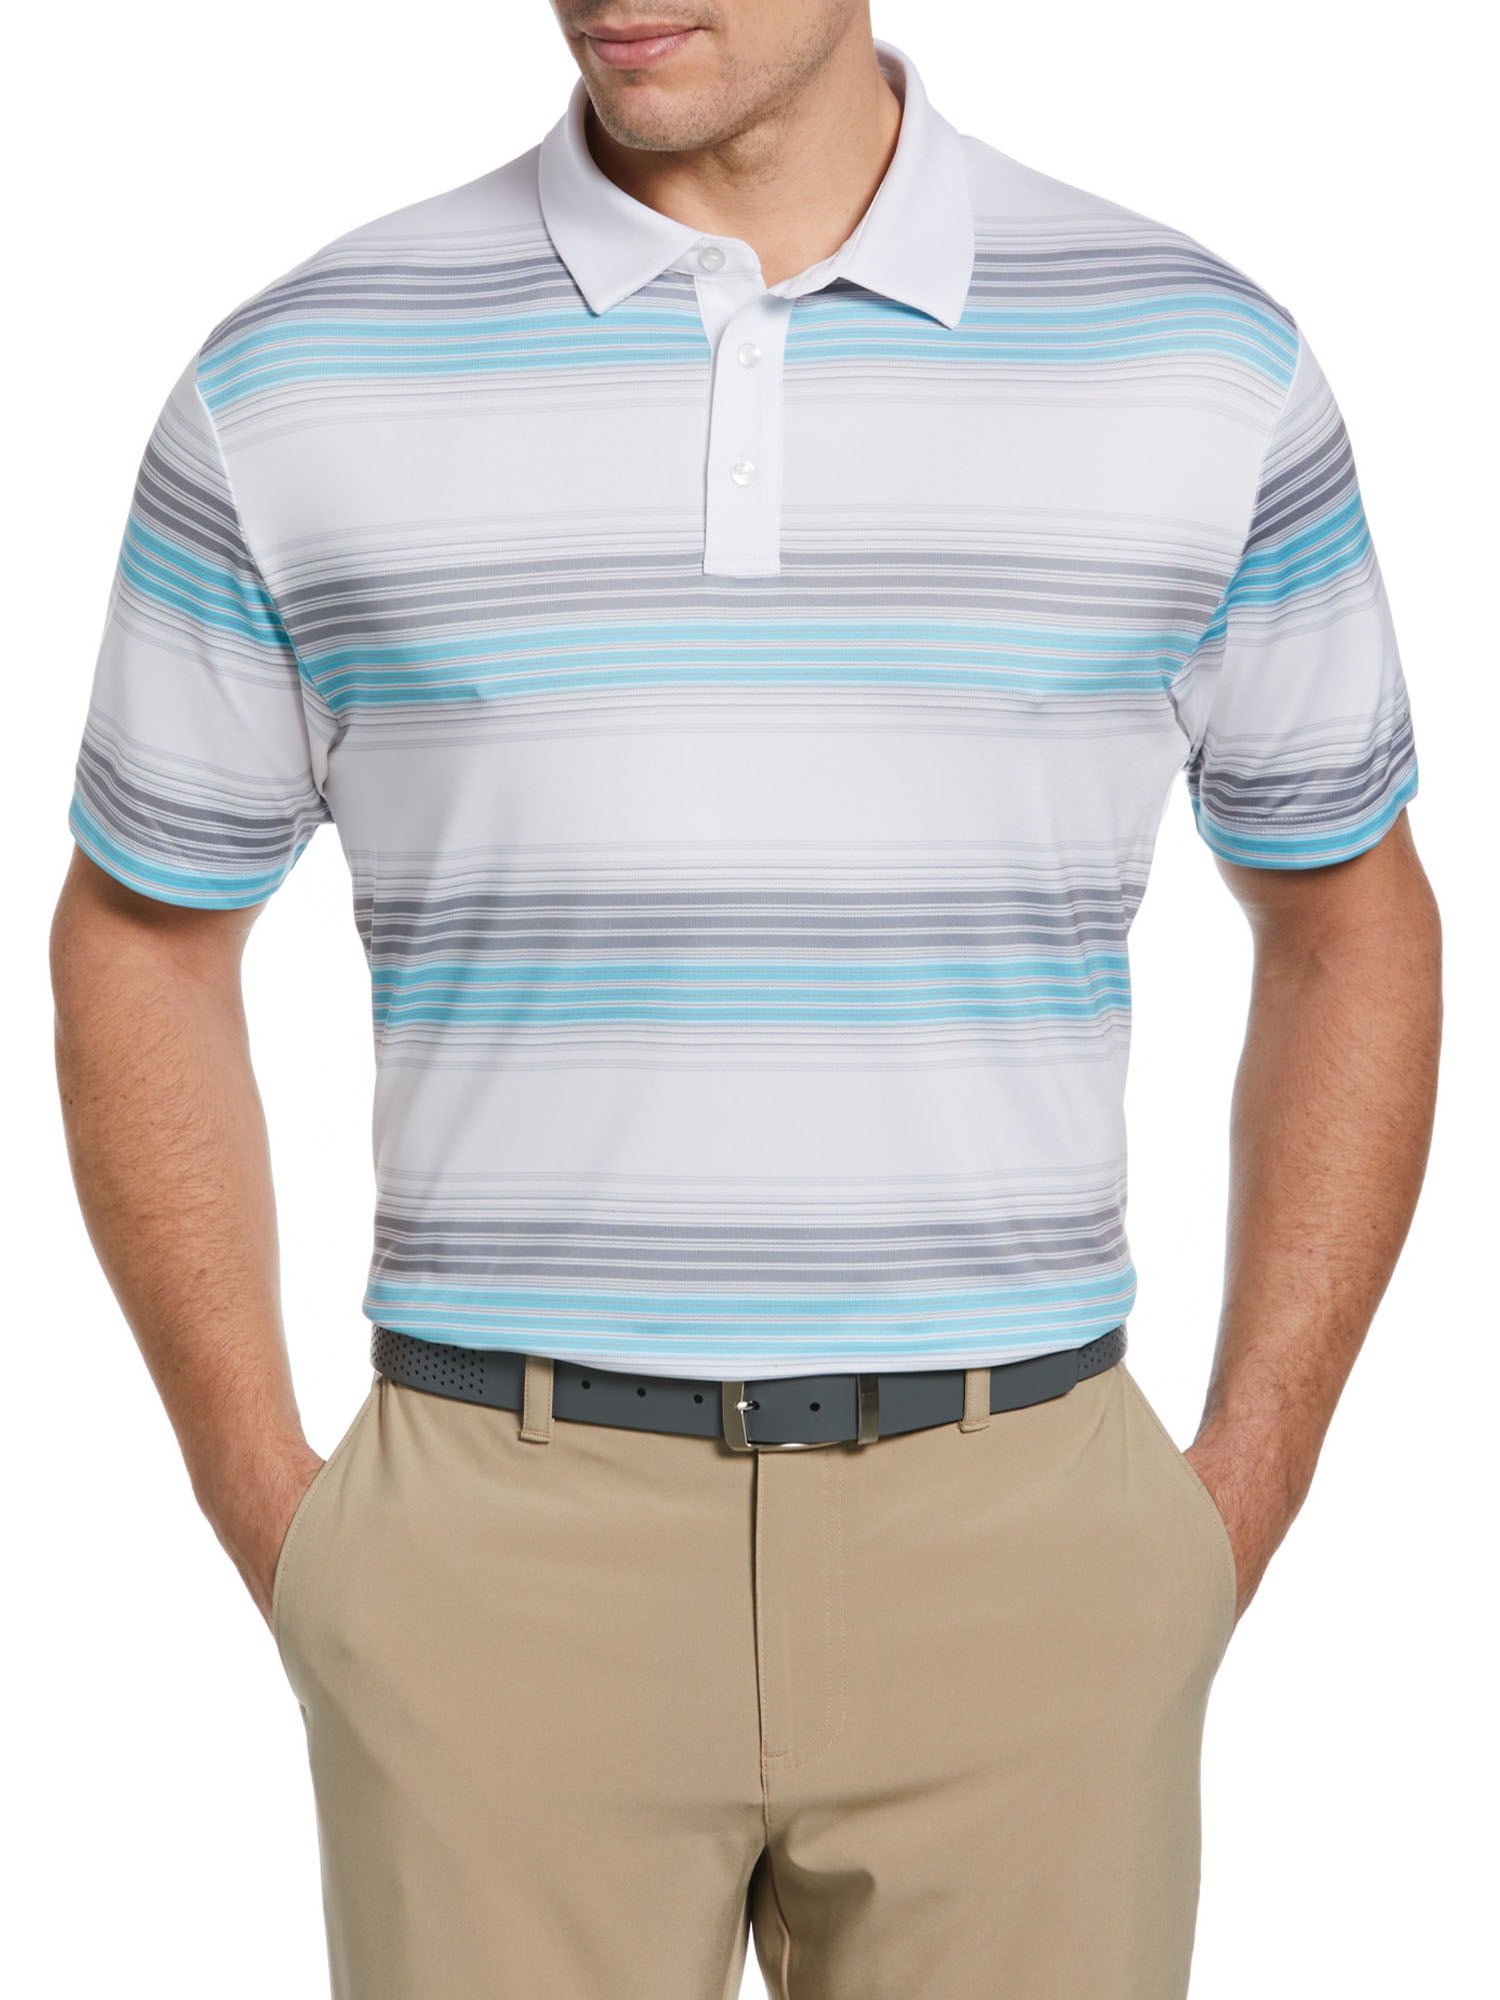 Ben Hogan Men’s Striped Performance Golf Polo Shirt with UV Protection ...